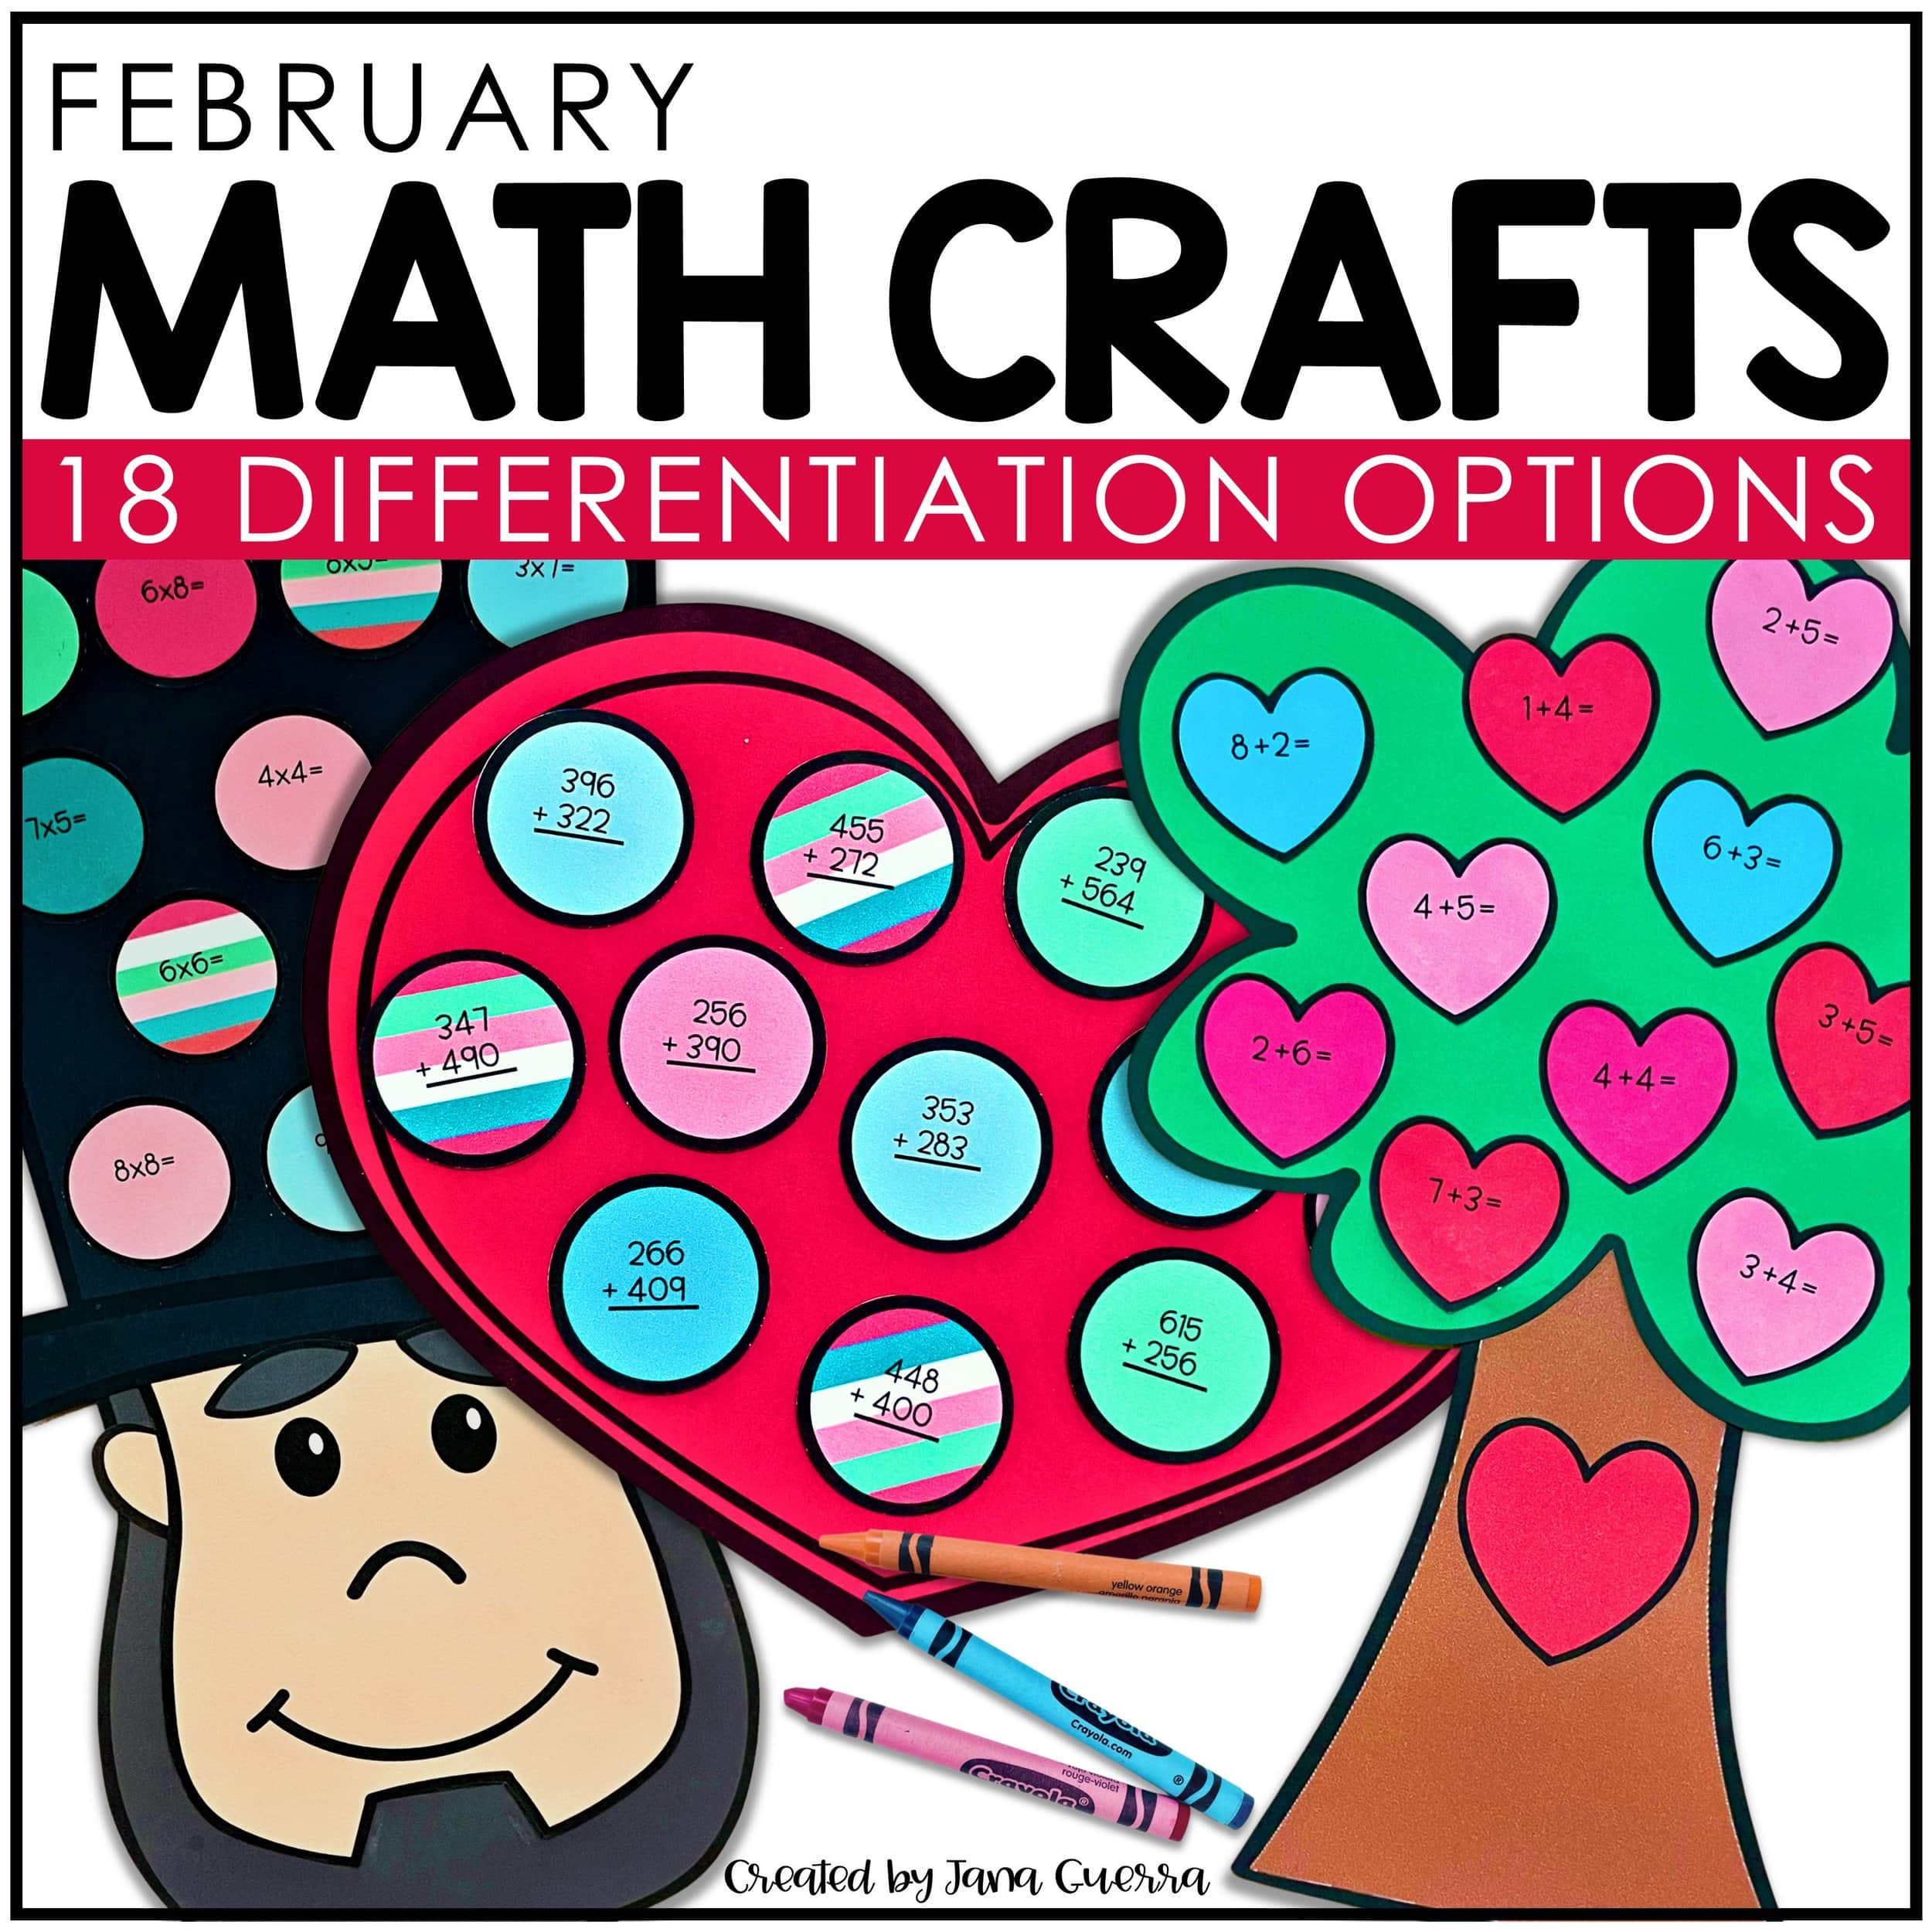 February Math Crafts